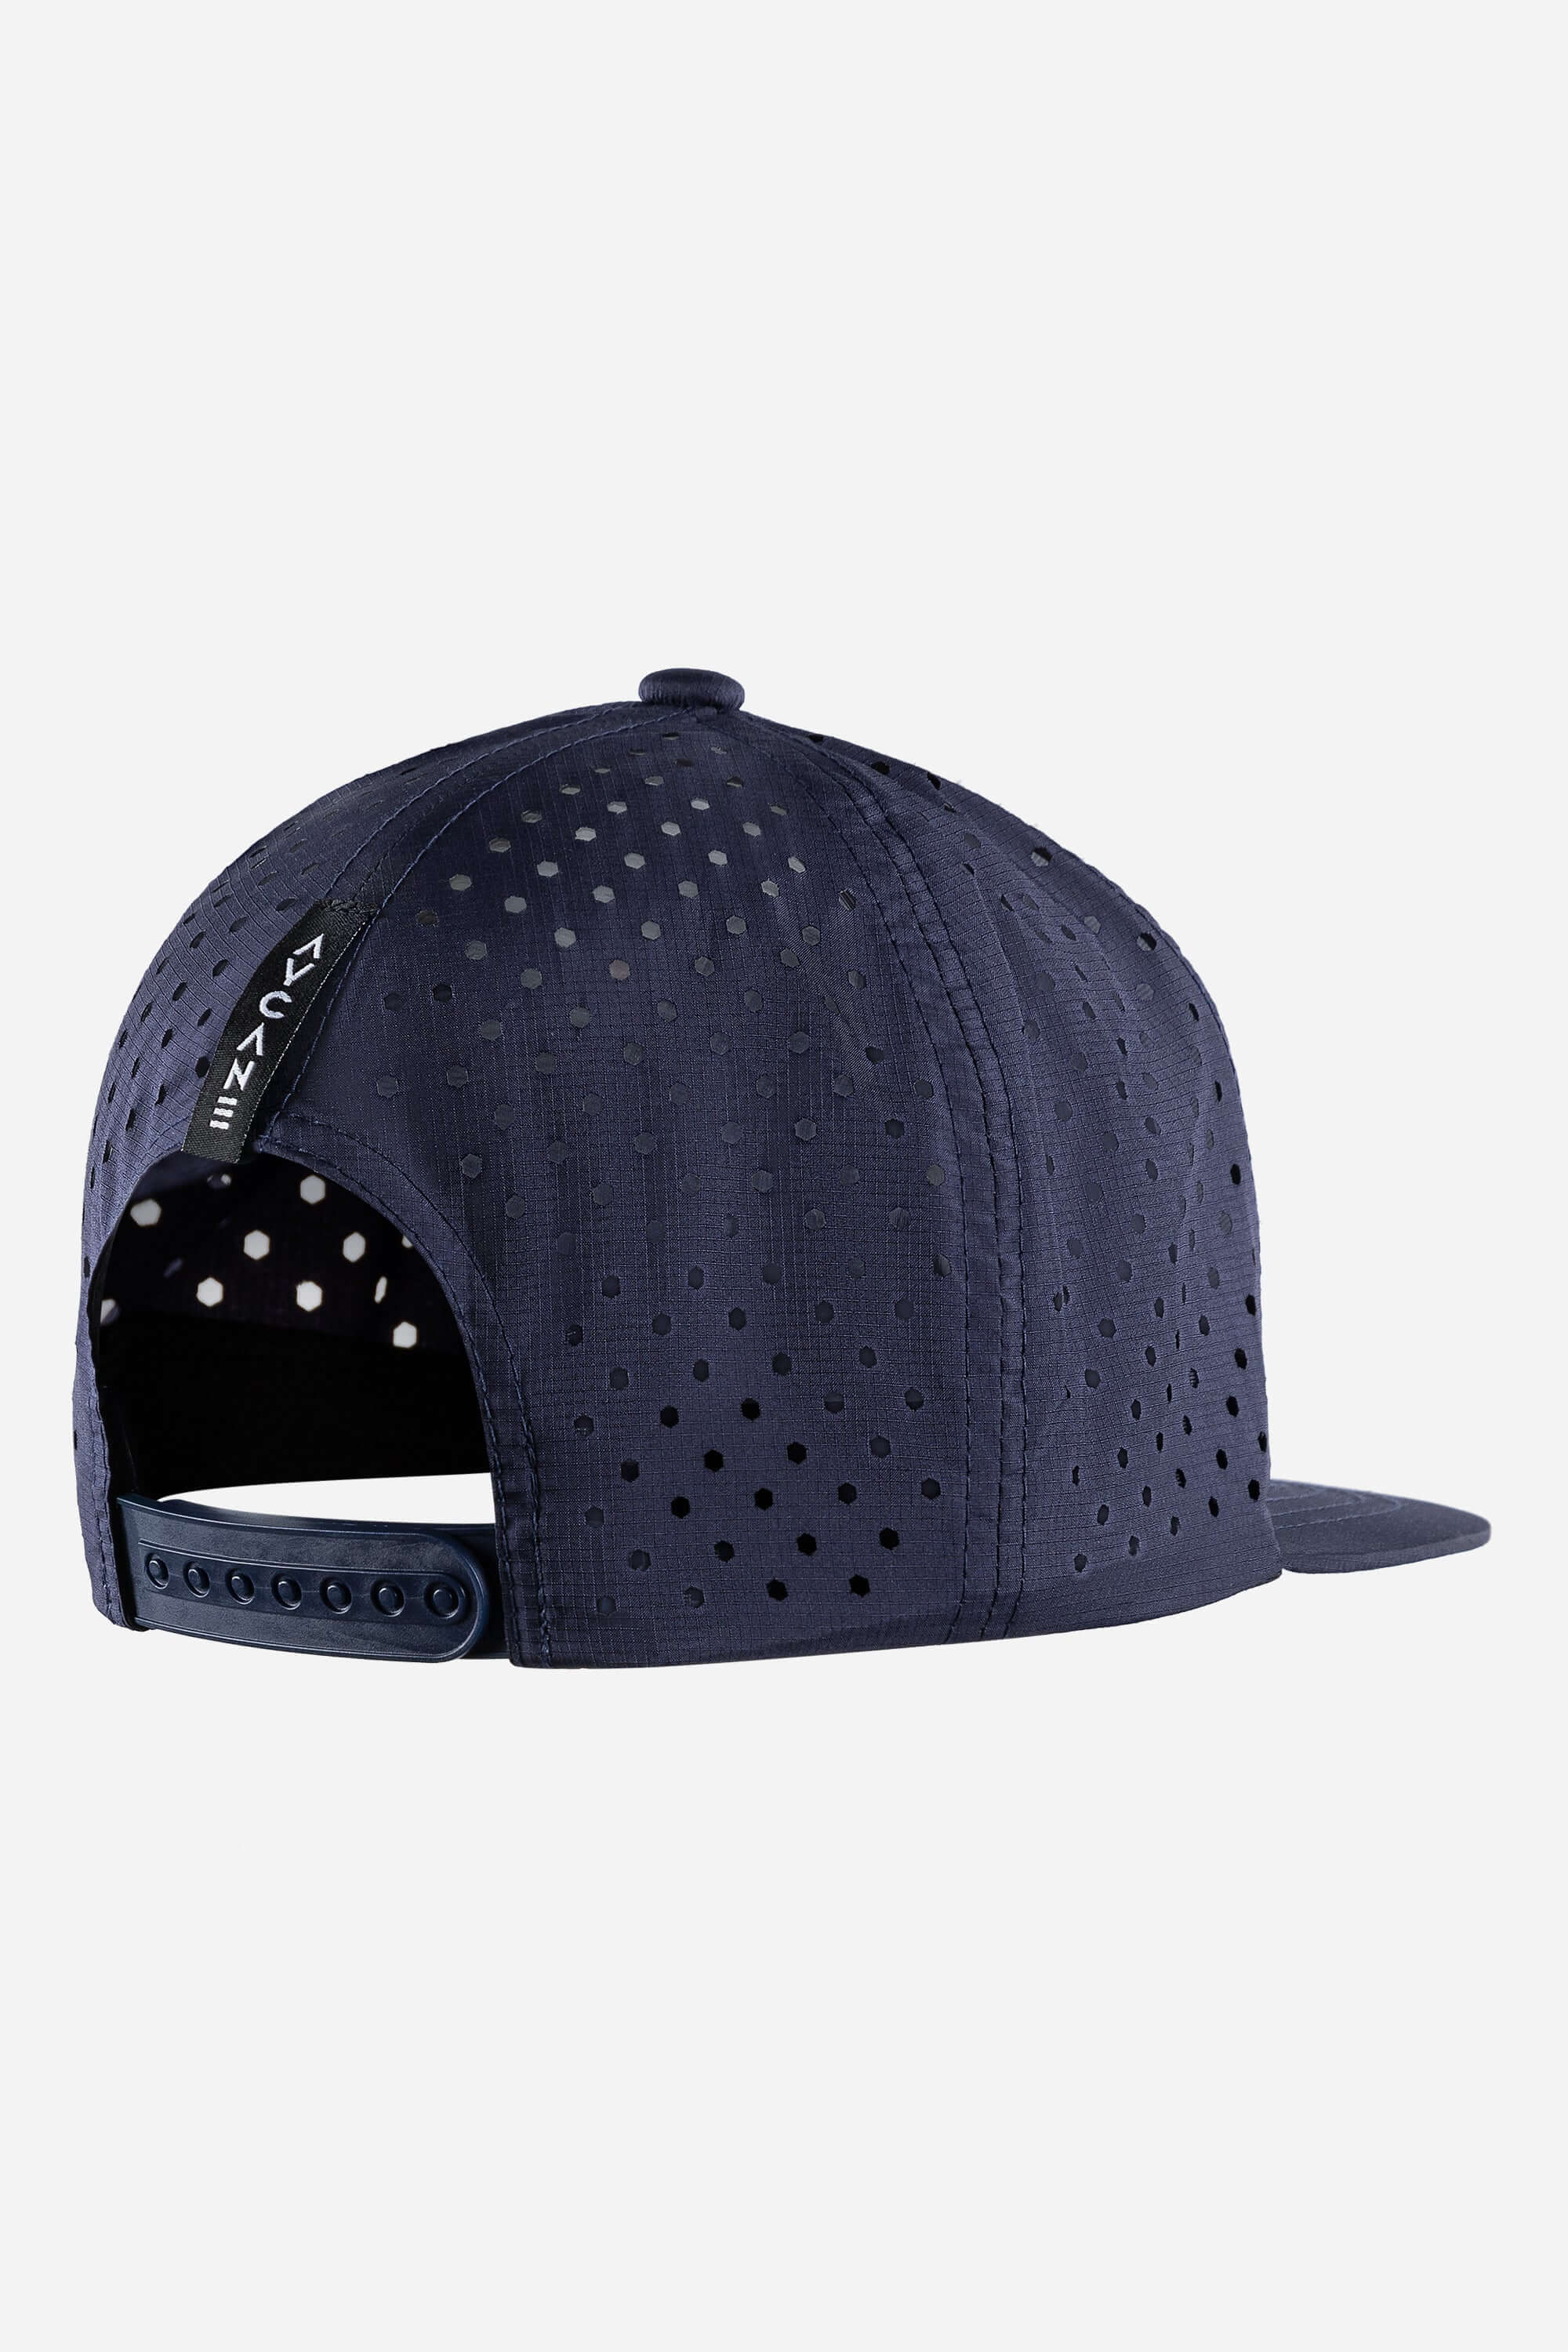 Blue hockey cap with laser cut holes